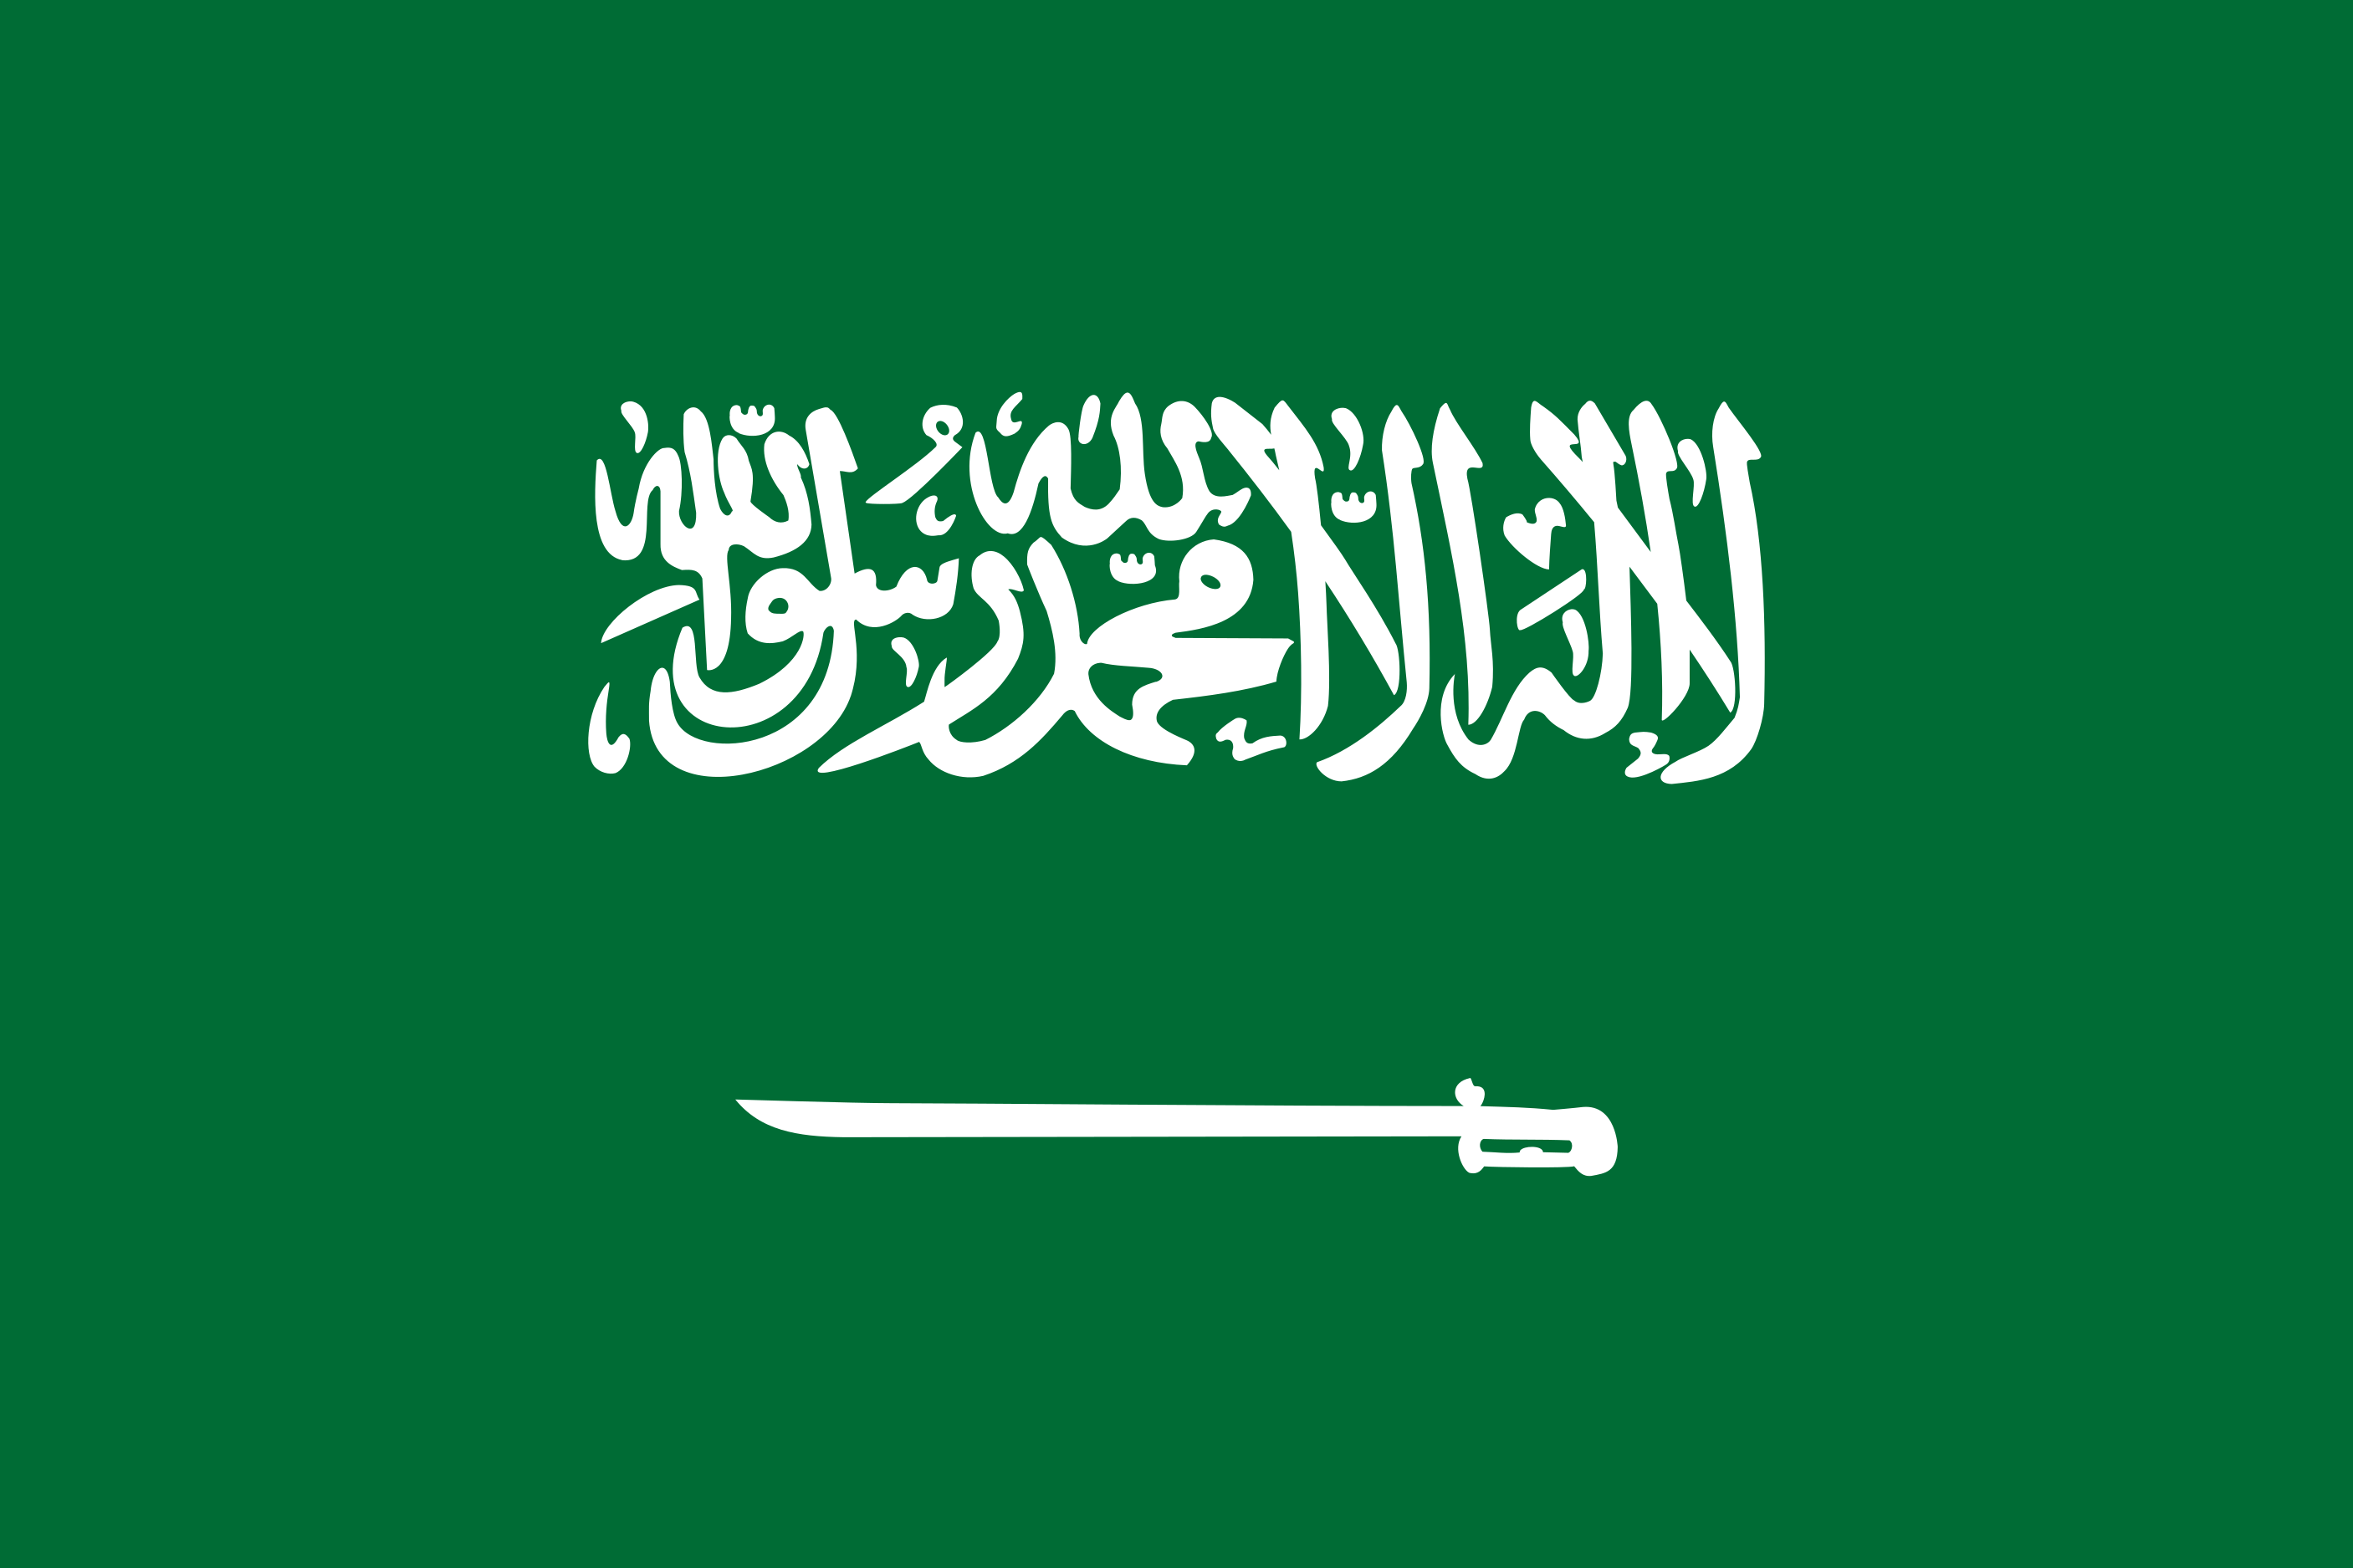 Saudi Arabia Flag Image - Free Download